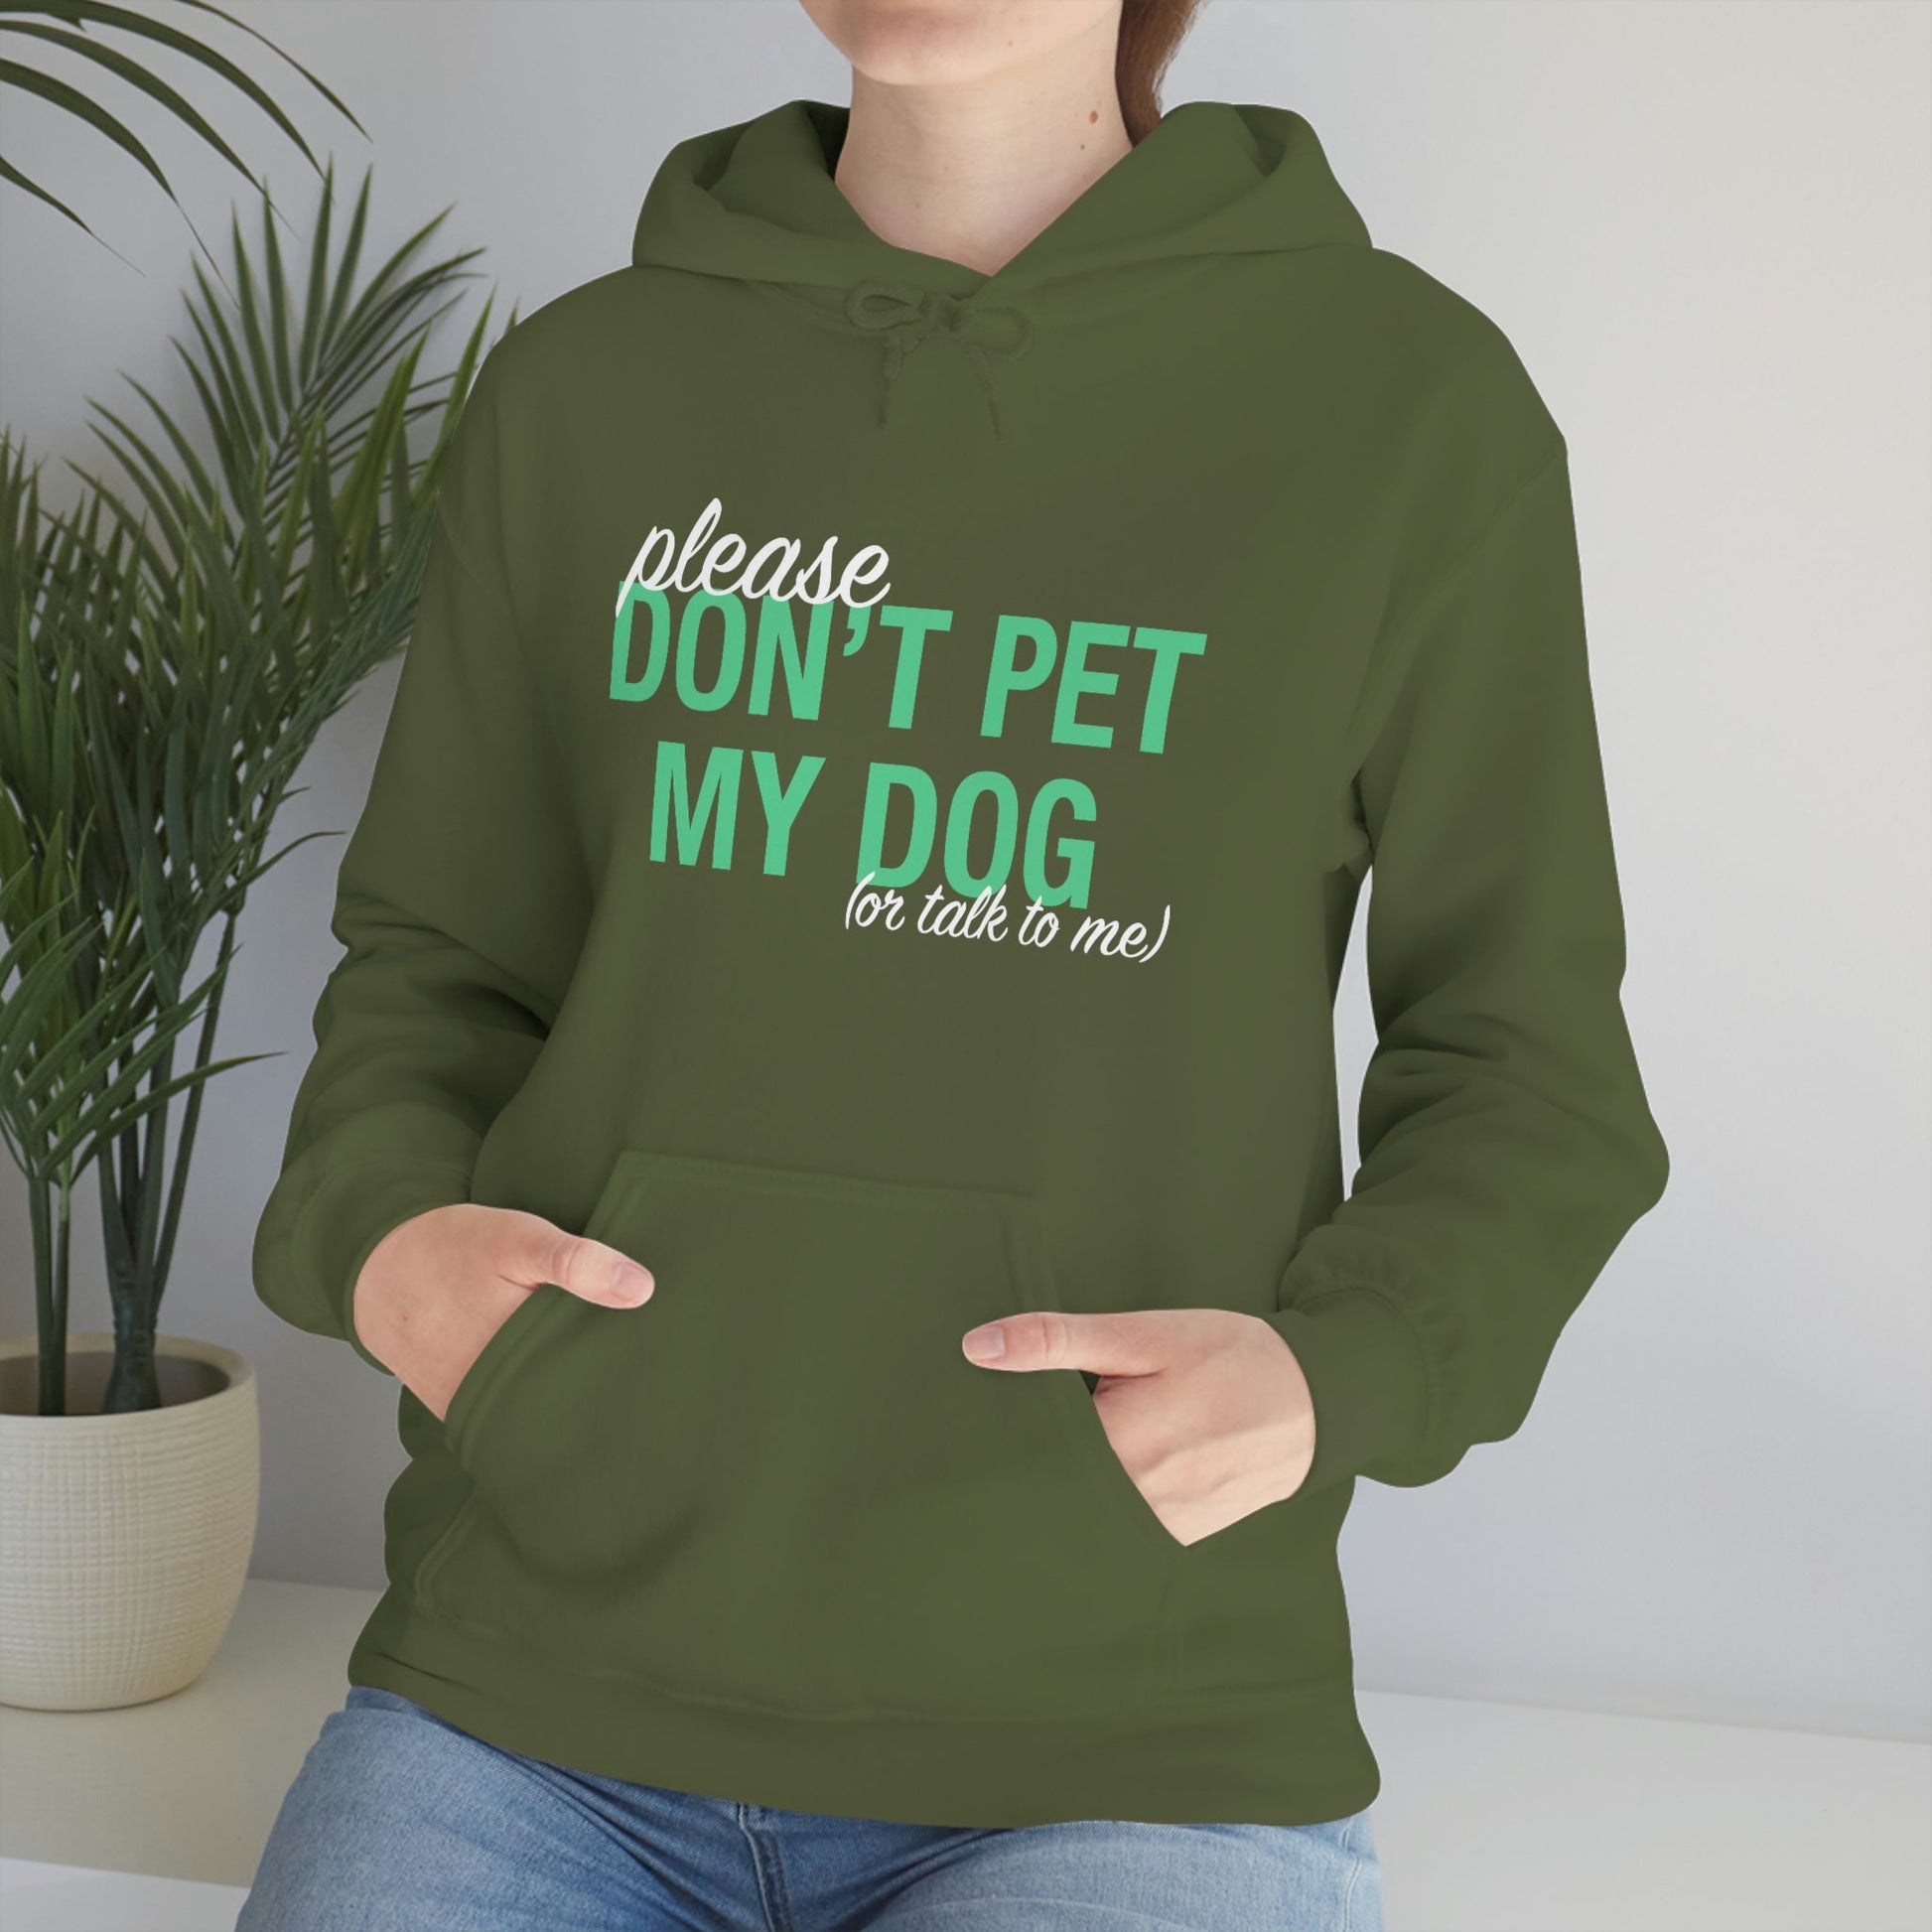 Please Don't Pet My Dog (Or Talk To Me) | Hooded Sweatshirt - Detezi Designs-85574233166338224944